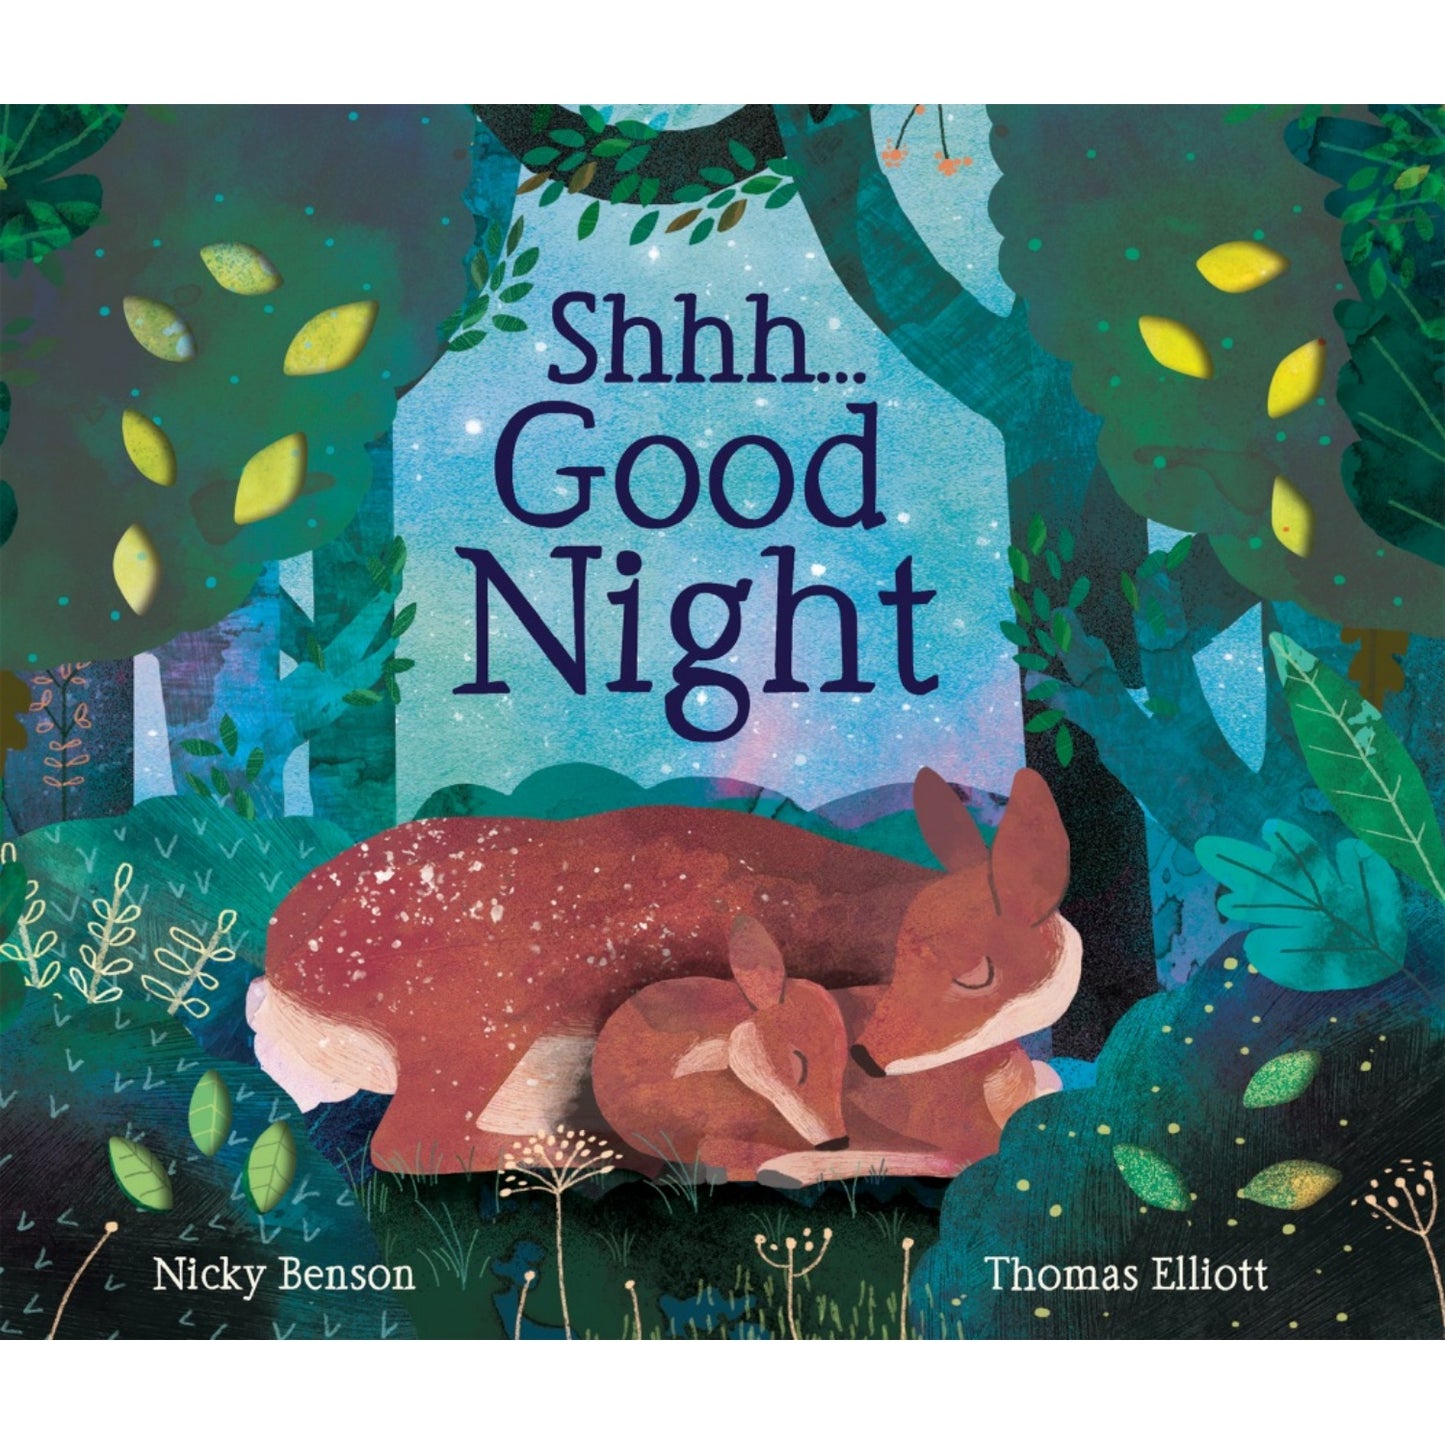 Shhh... Good Night | Children’s Board Book on Animals